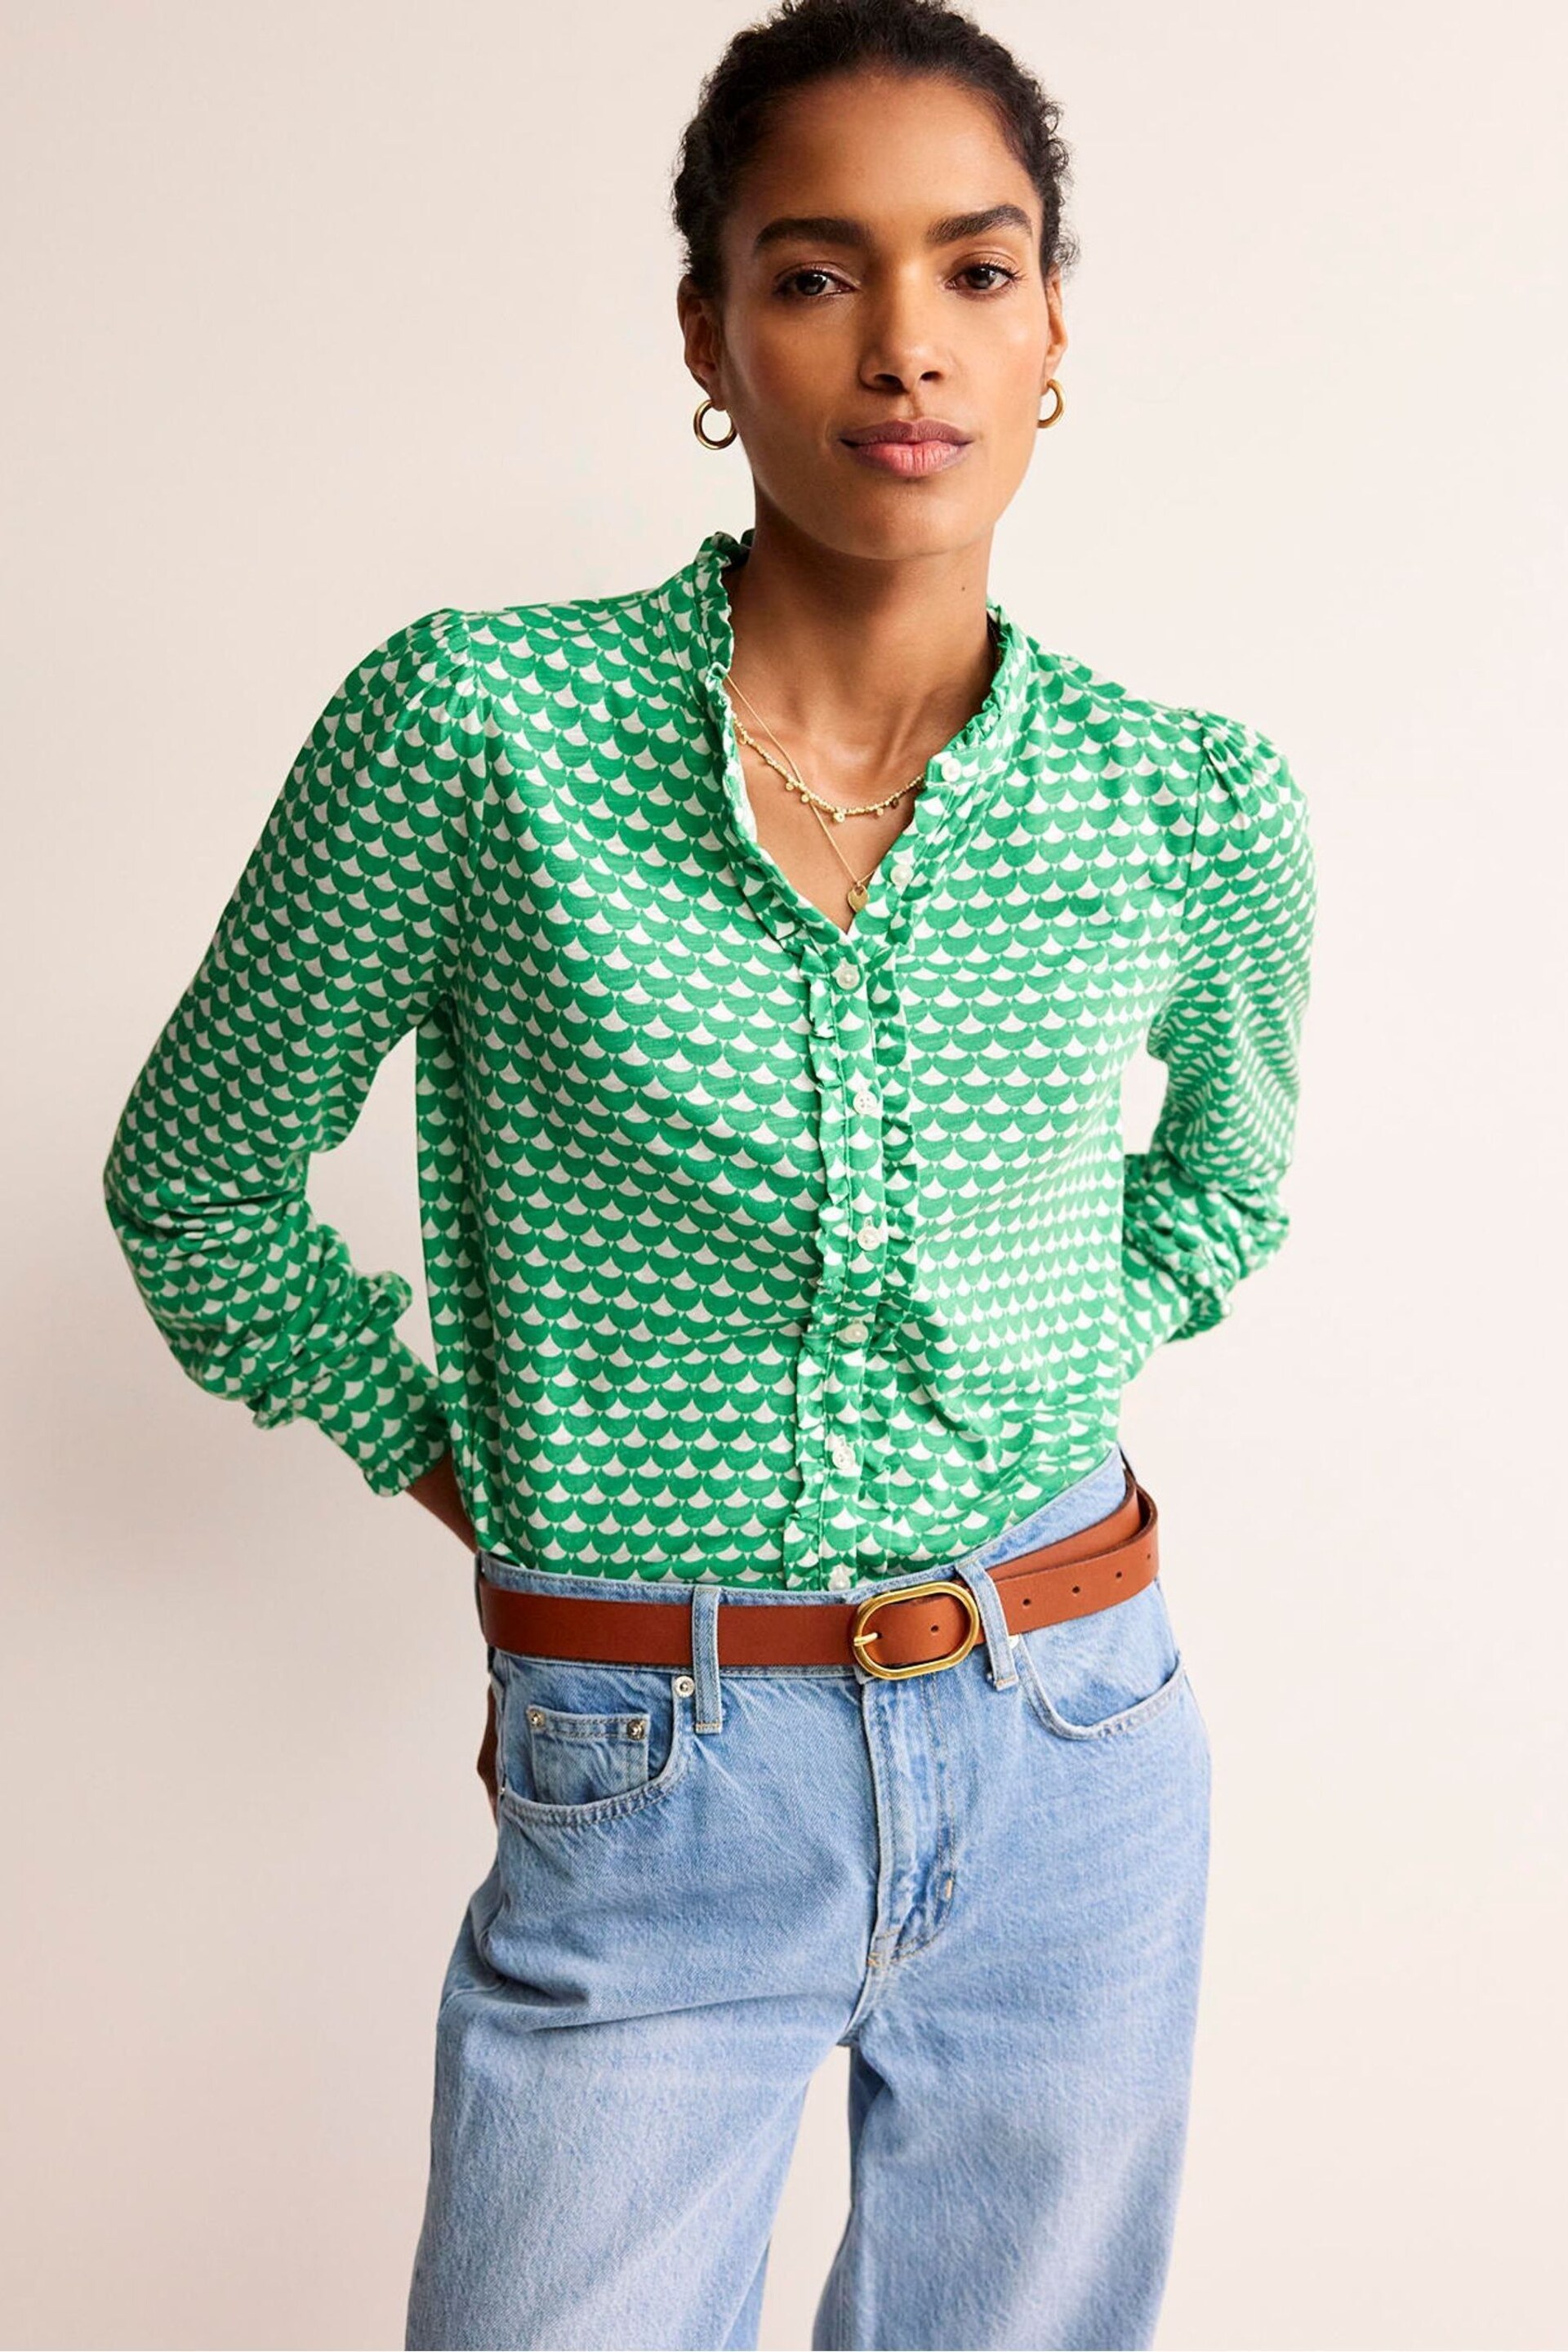 Boden Green Caroline Jersey Shirt - Image 1 of 5